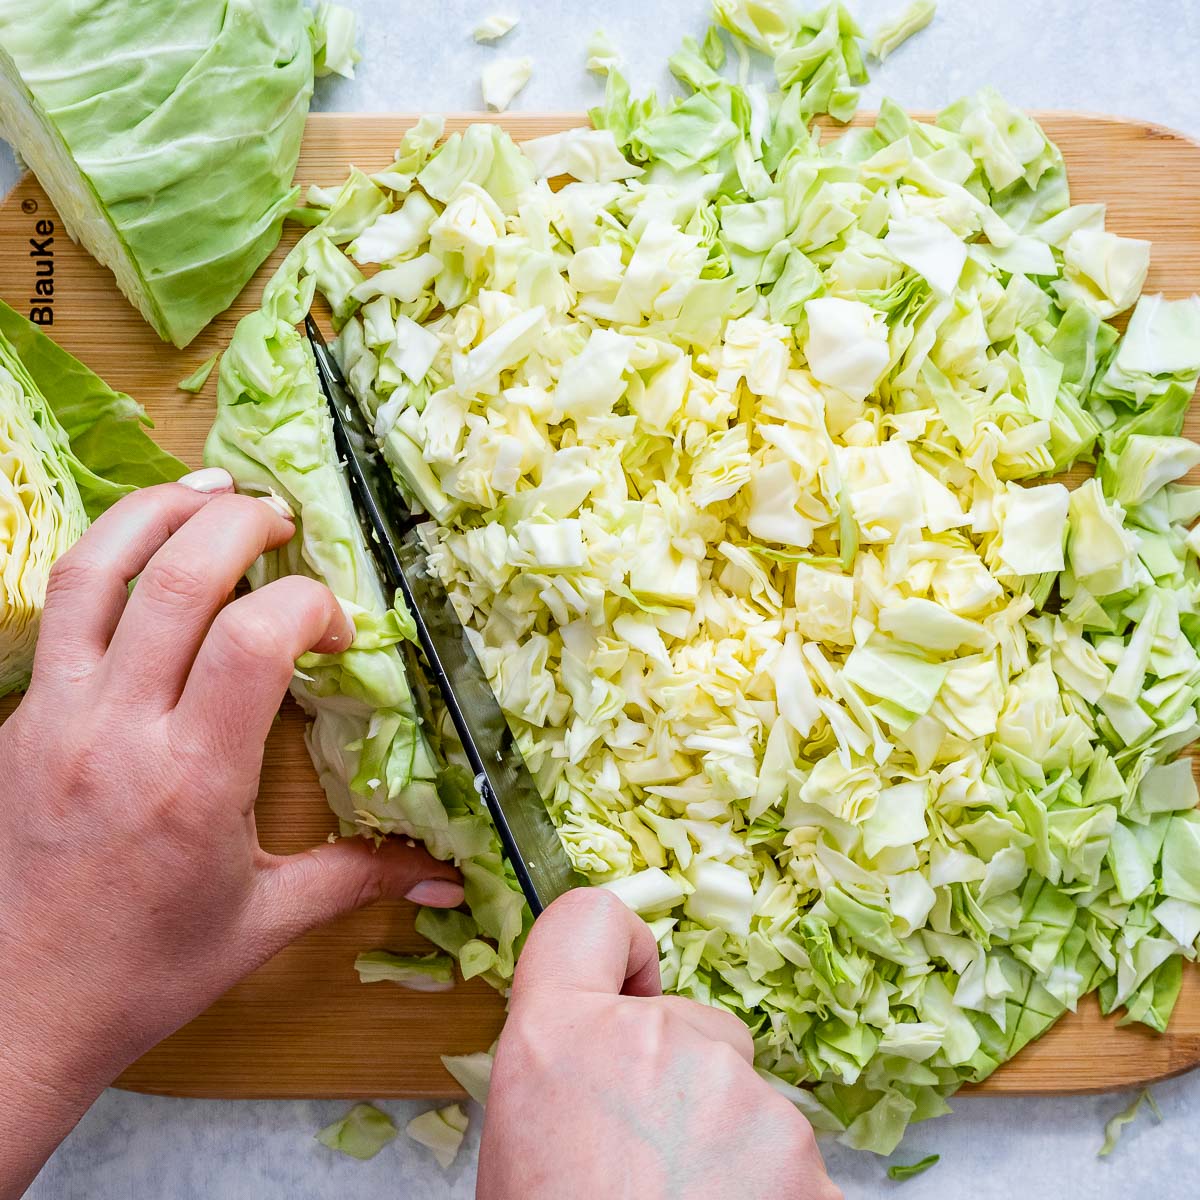 https://cleanfoodcrush.com/wp-content/uploads/2022/07/Micro-chopped-salad.jpg